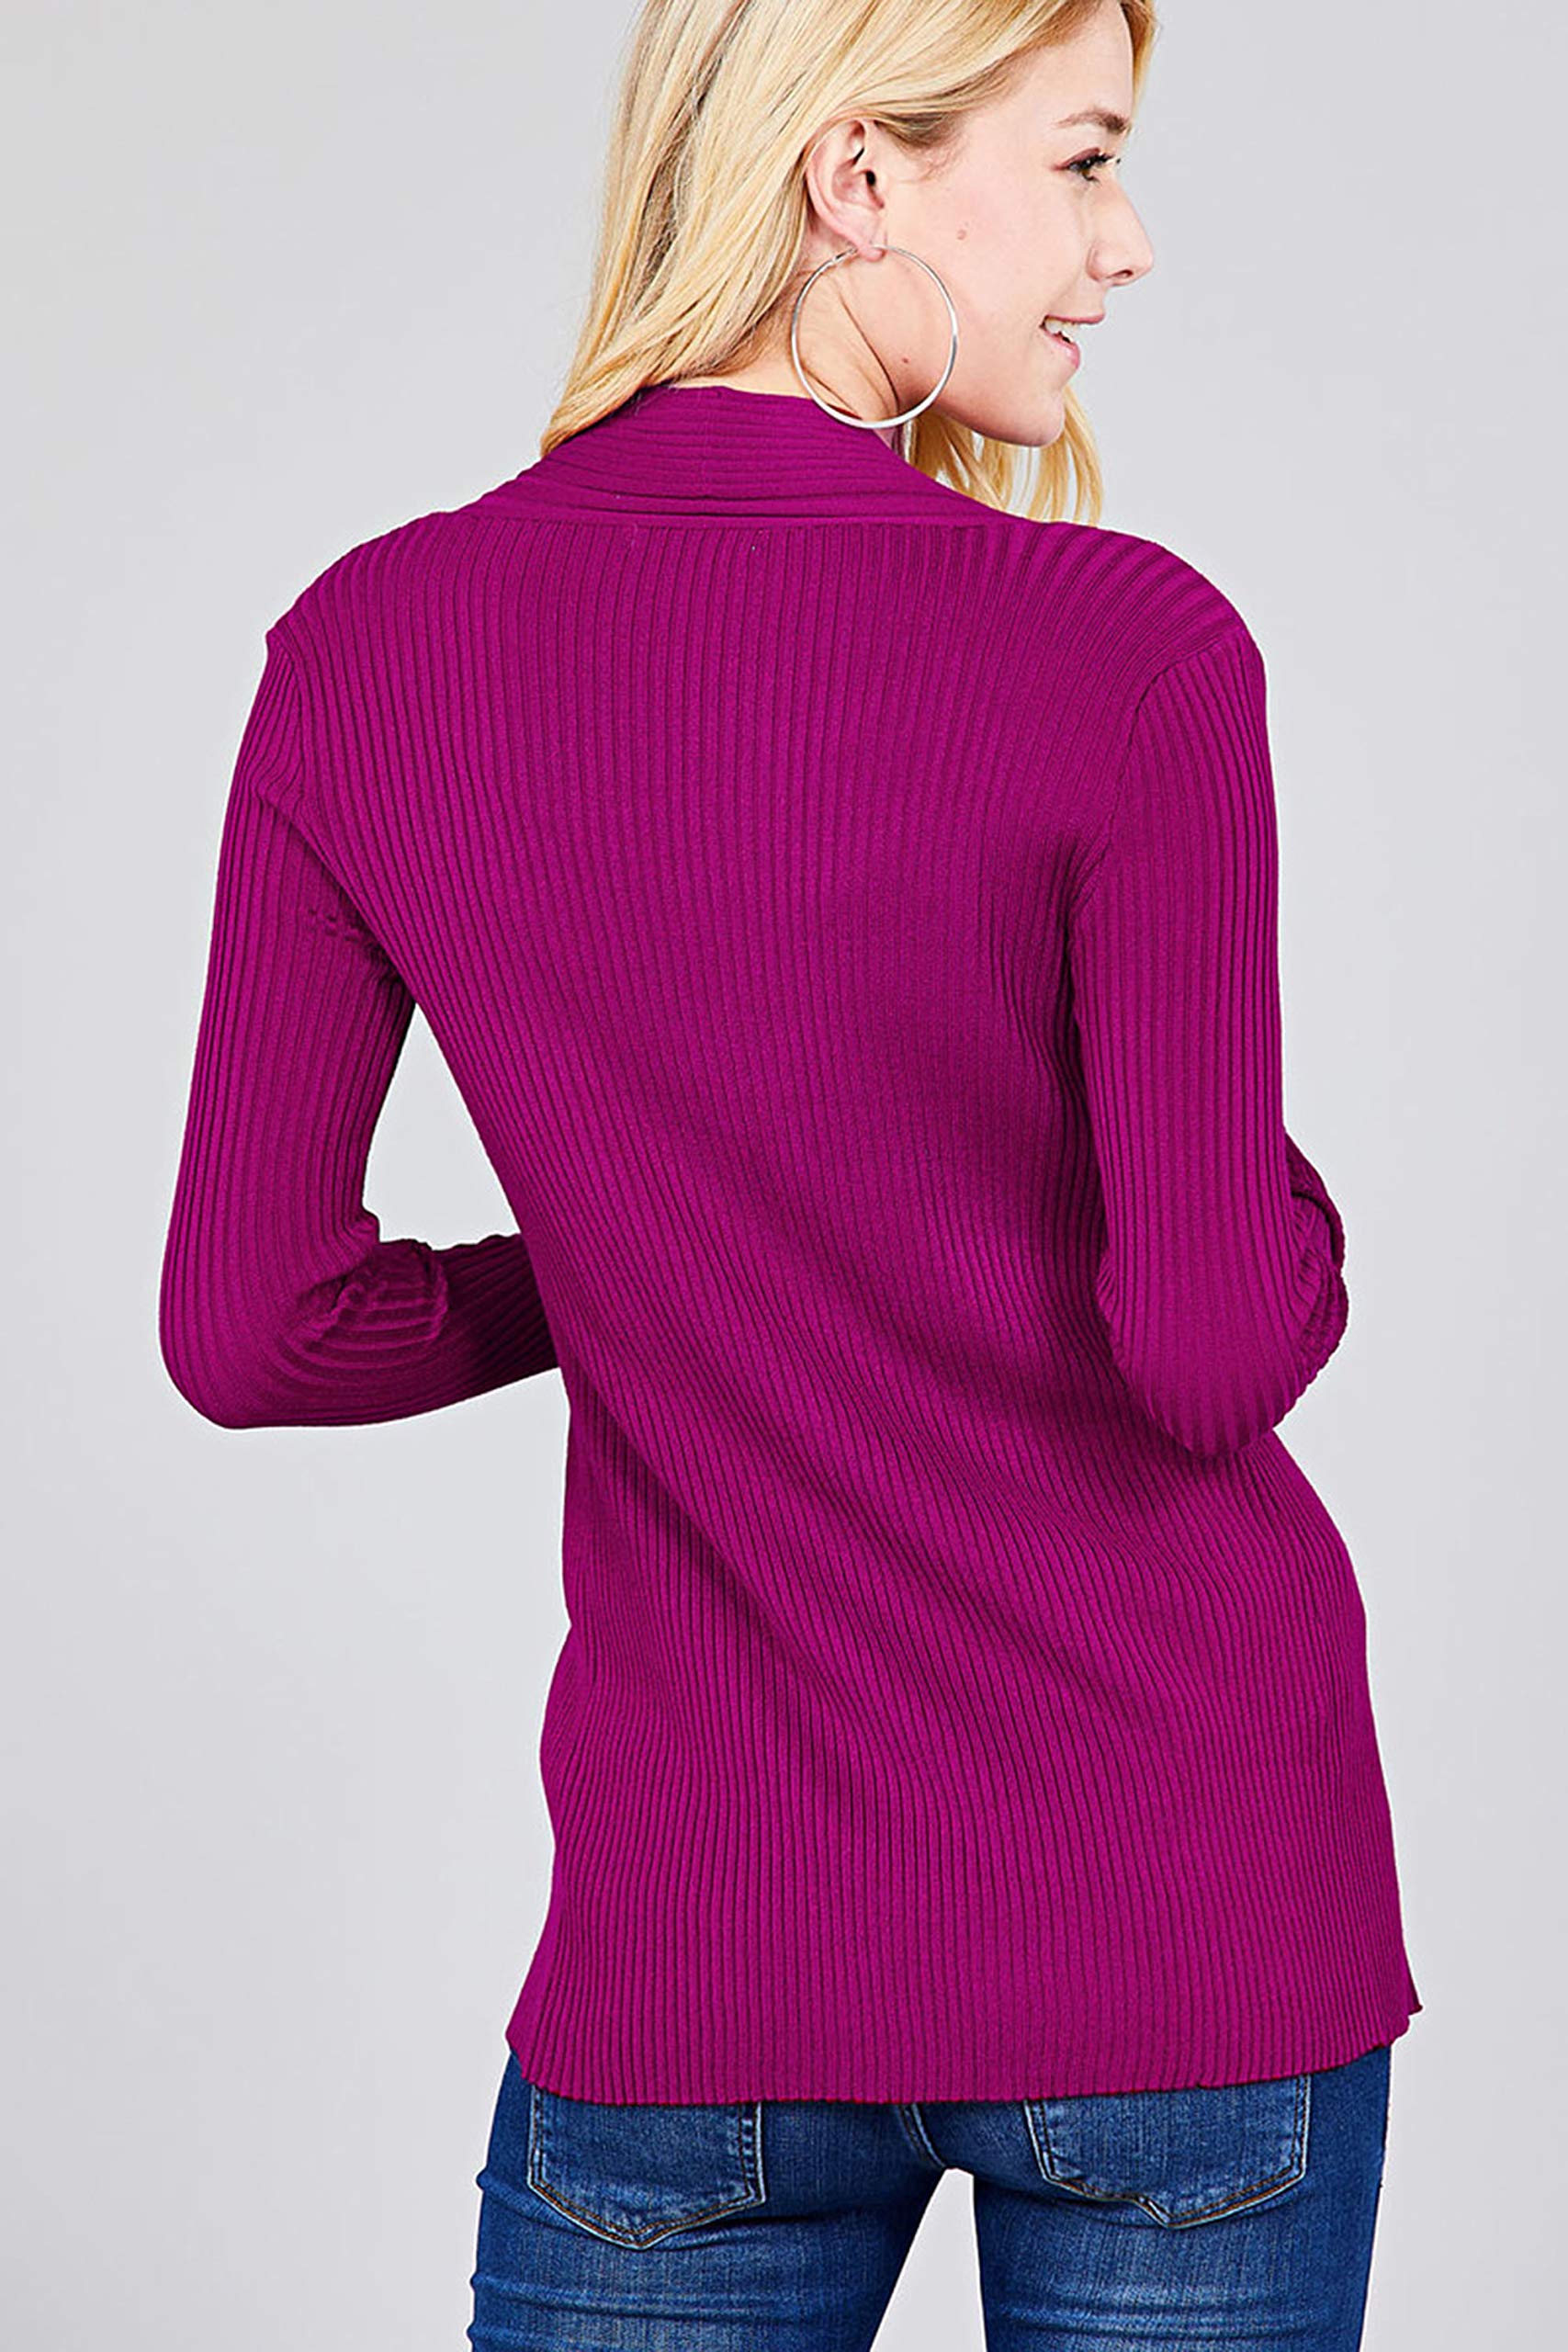 Khanomak Women's Plain Long Ribbed Open Front Long Sleeve Knit Cardigan Sweater